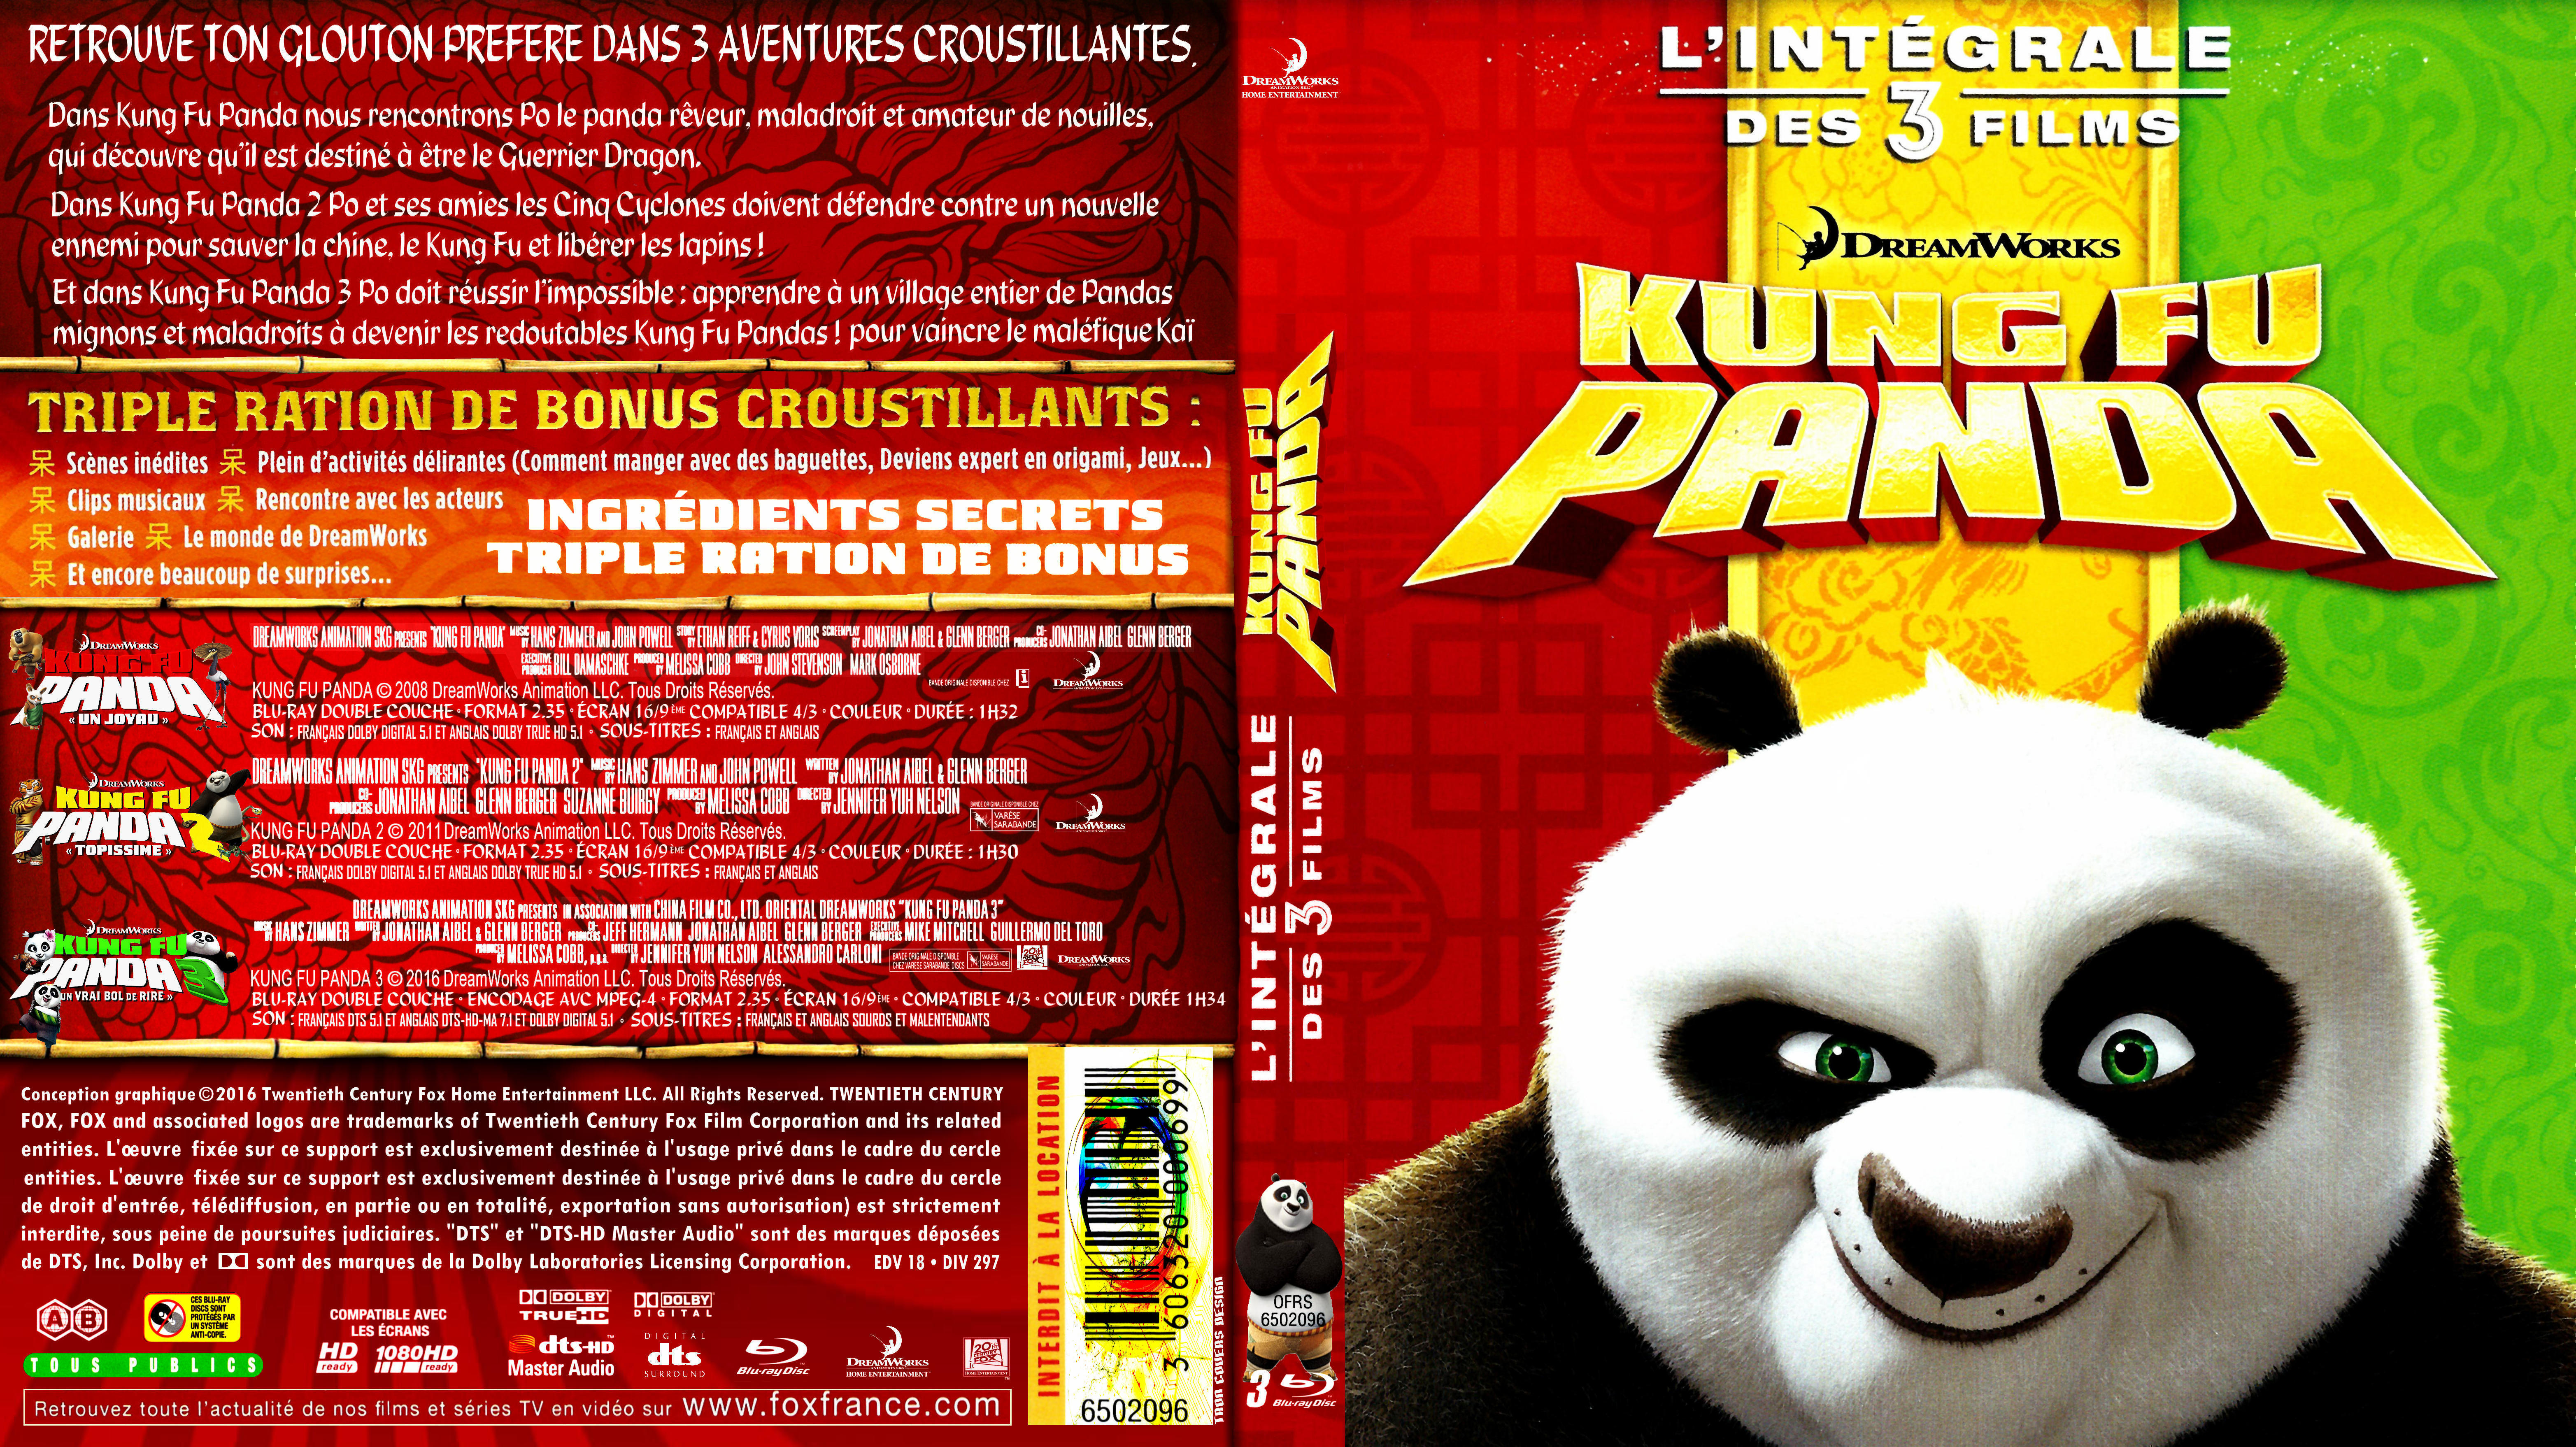 Jaquette DVD Kung fu panda coffret custom (BLU-RAY)